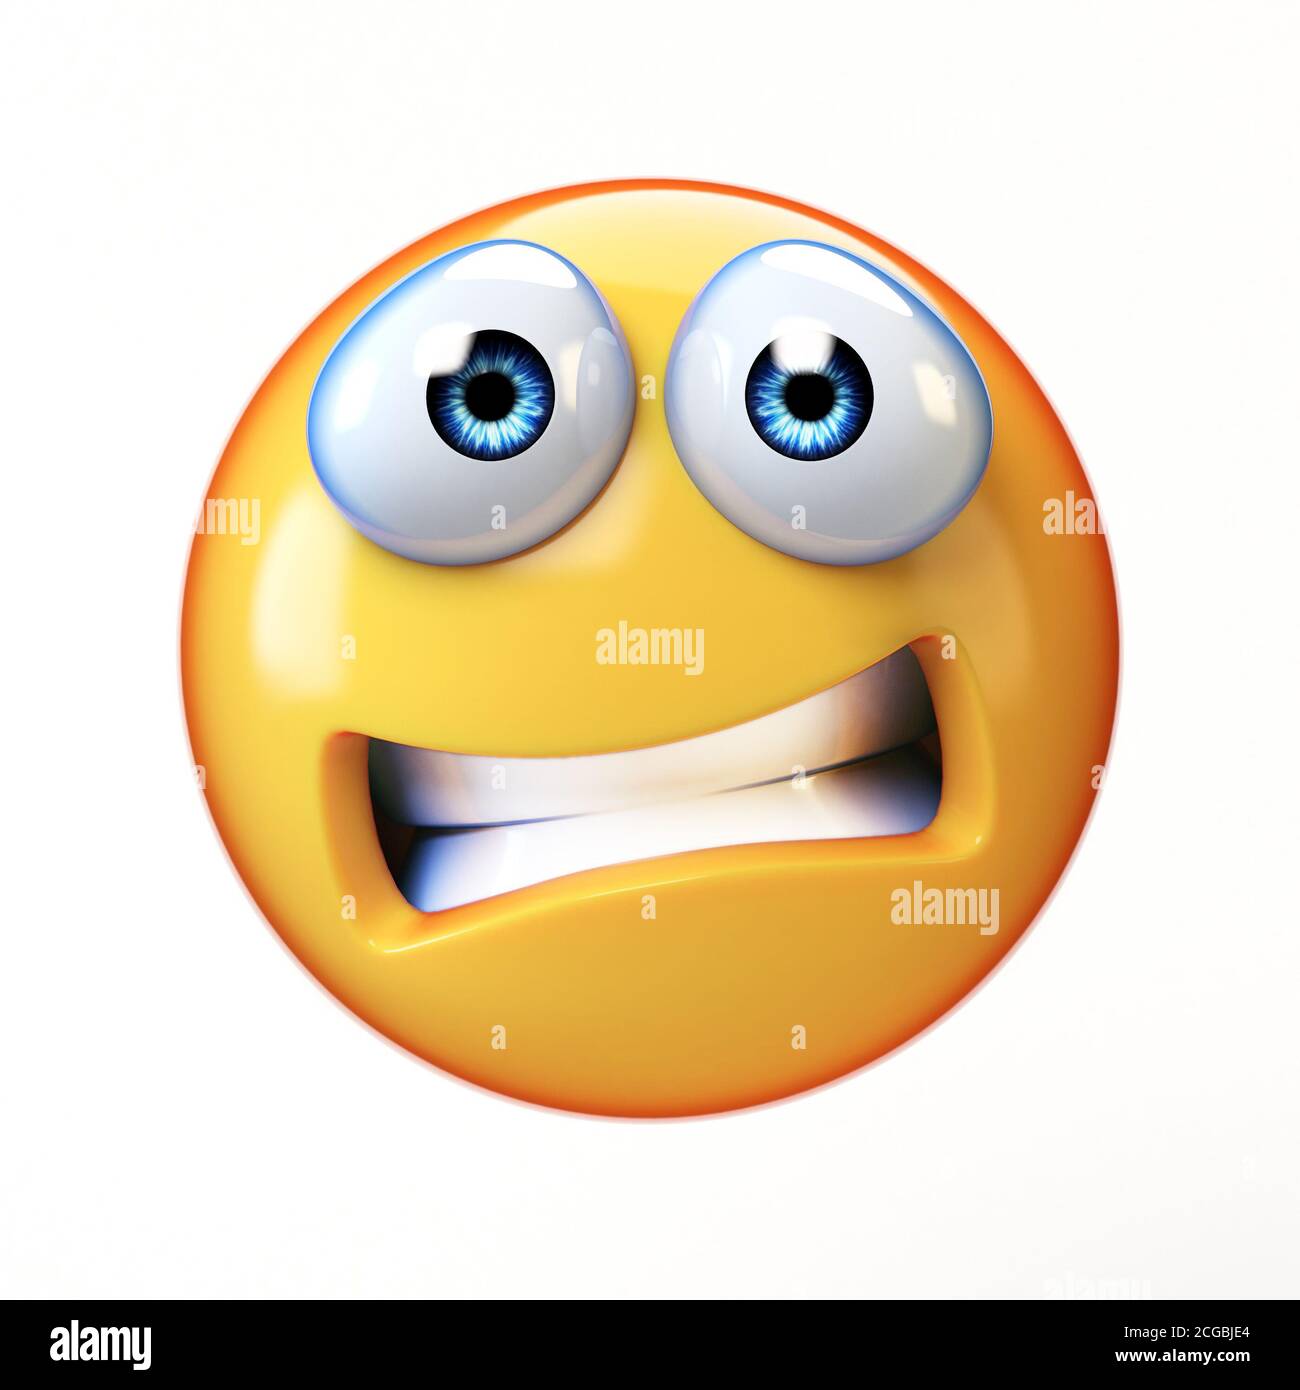 Scared Emoticon Emoji Smiley Vector Illustration Stock Illustration -  Download Image Now - iStock